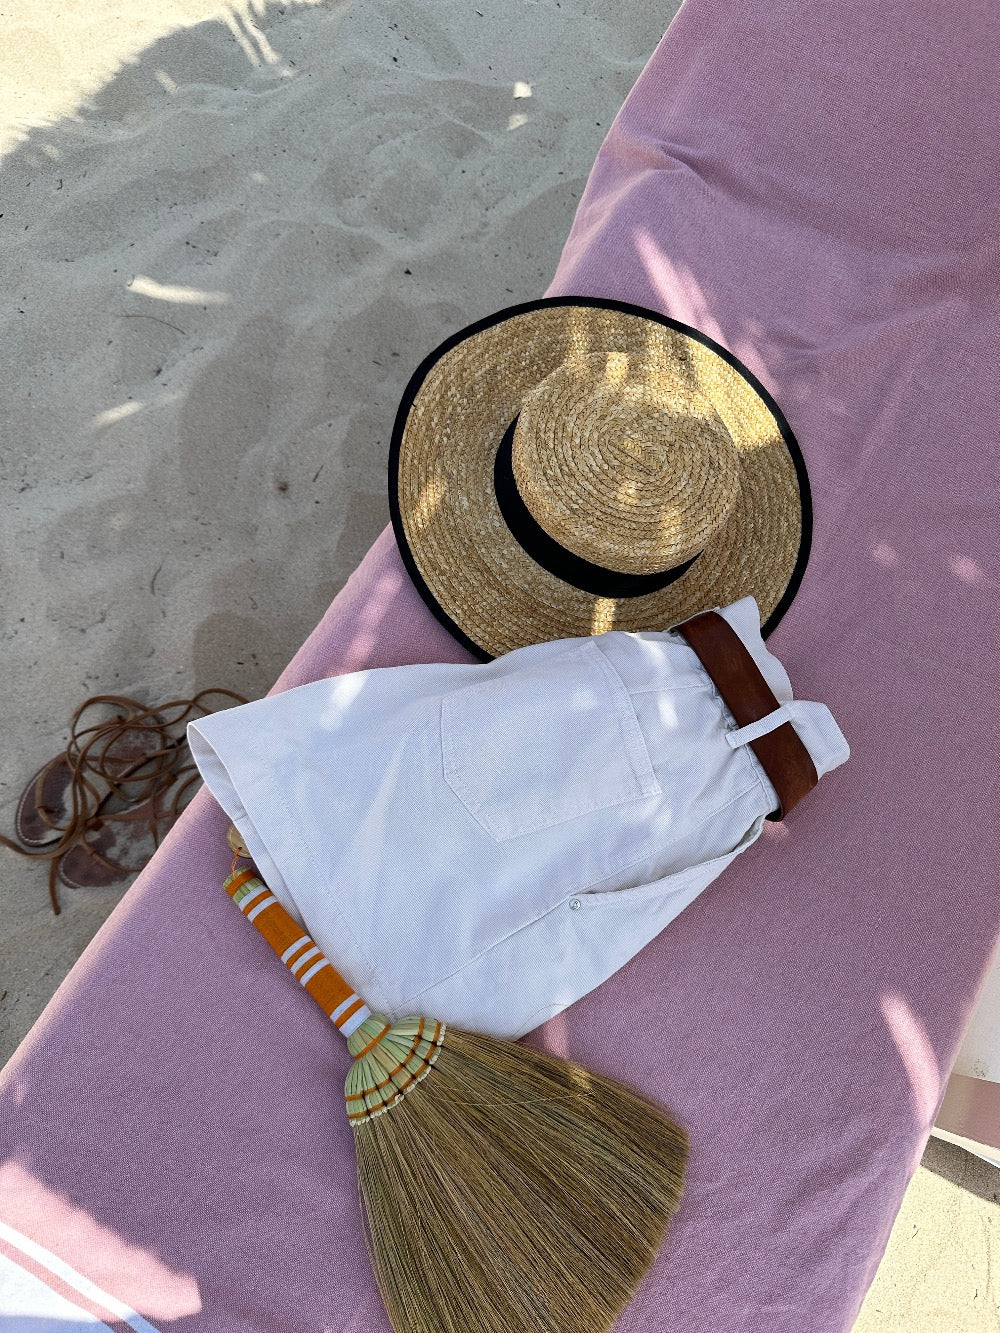 My Summer fan - Beach accessories lifestyle